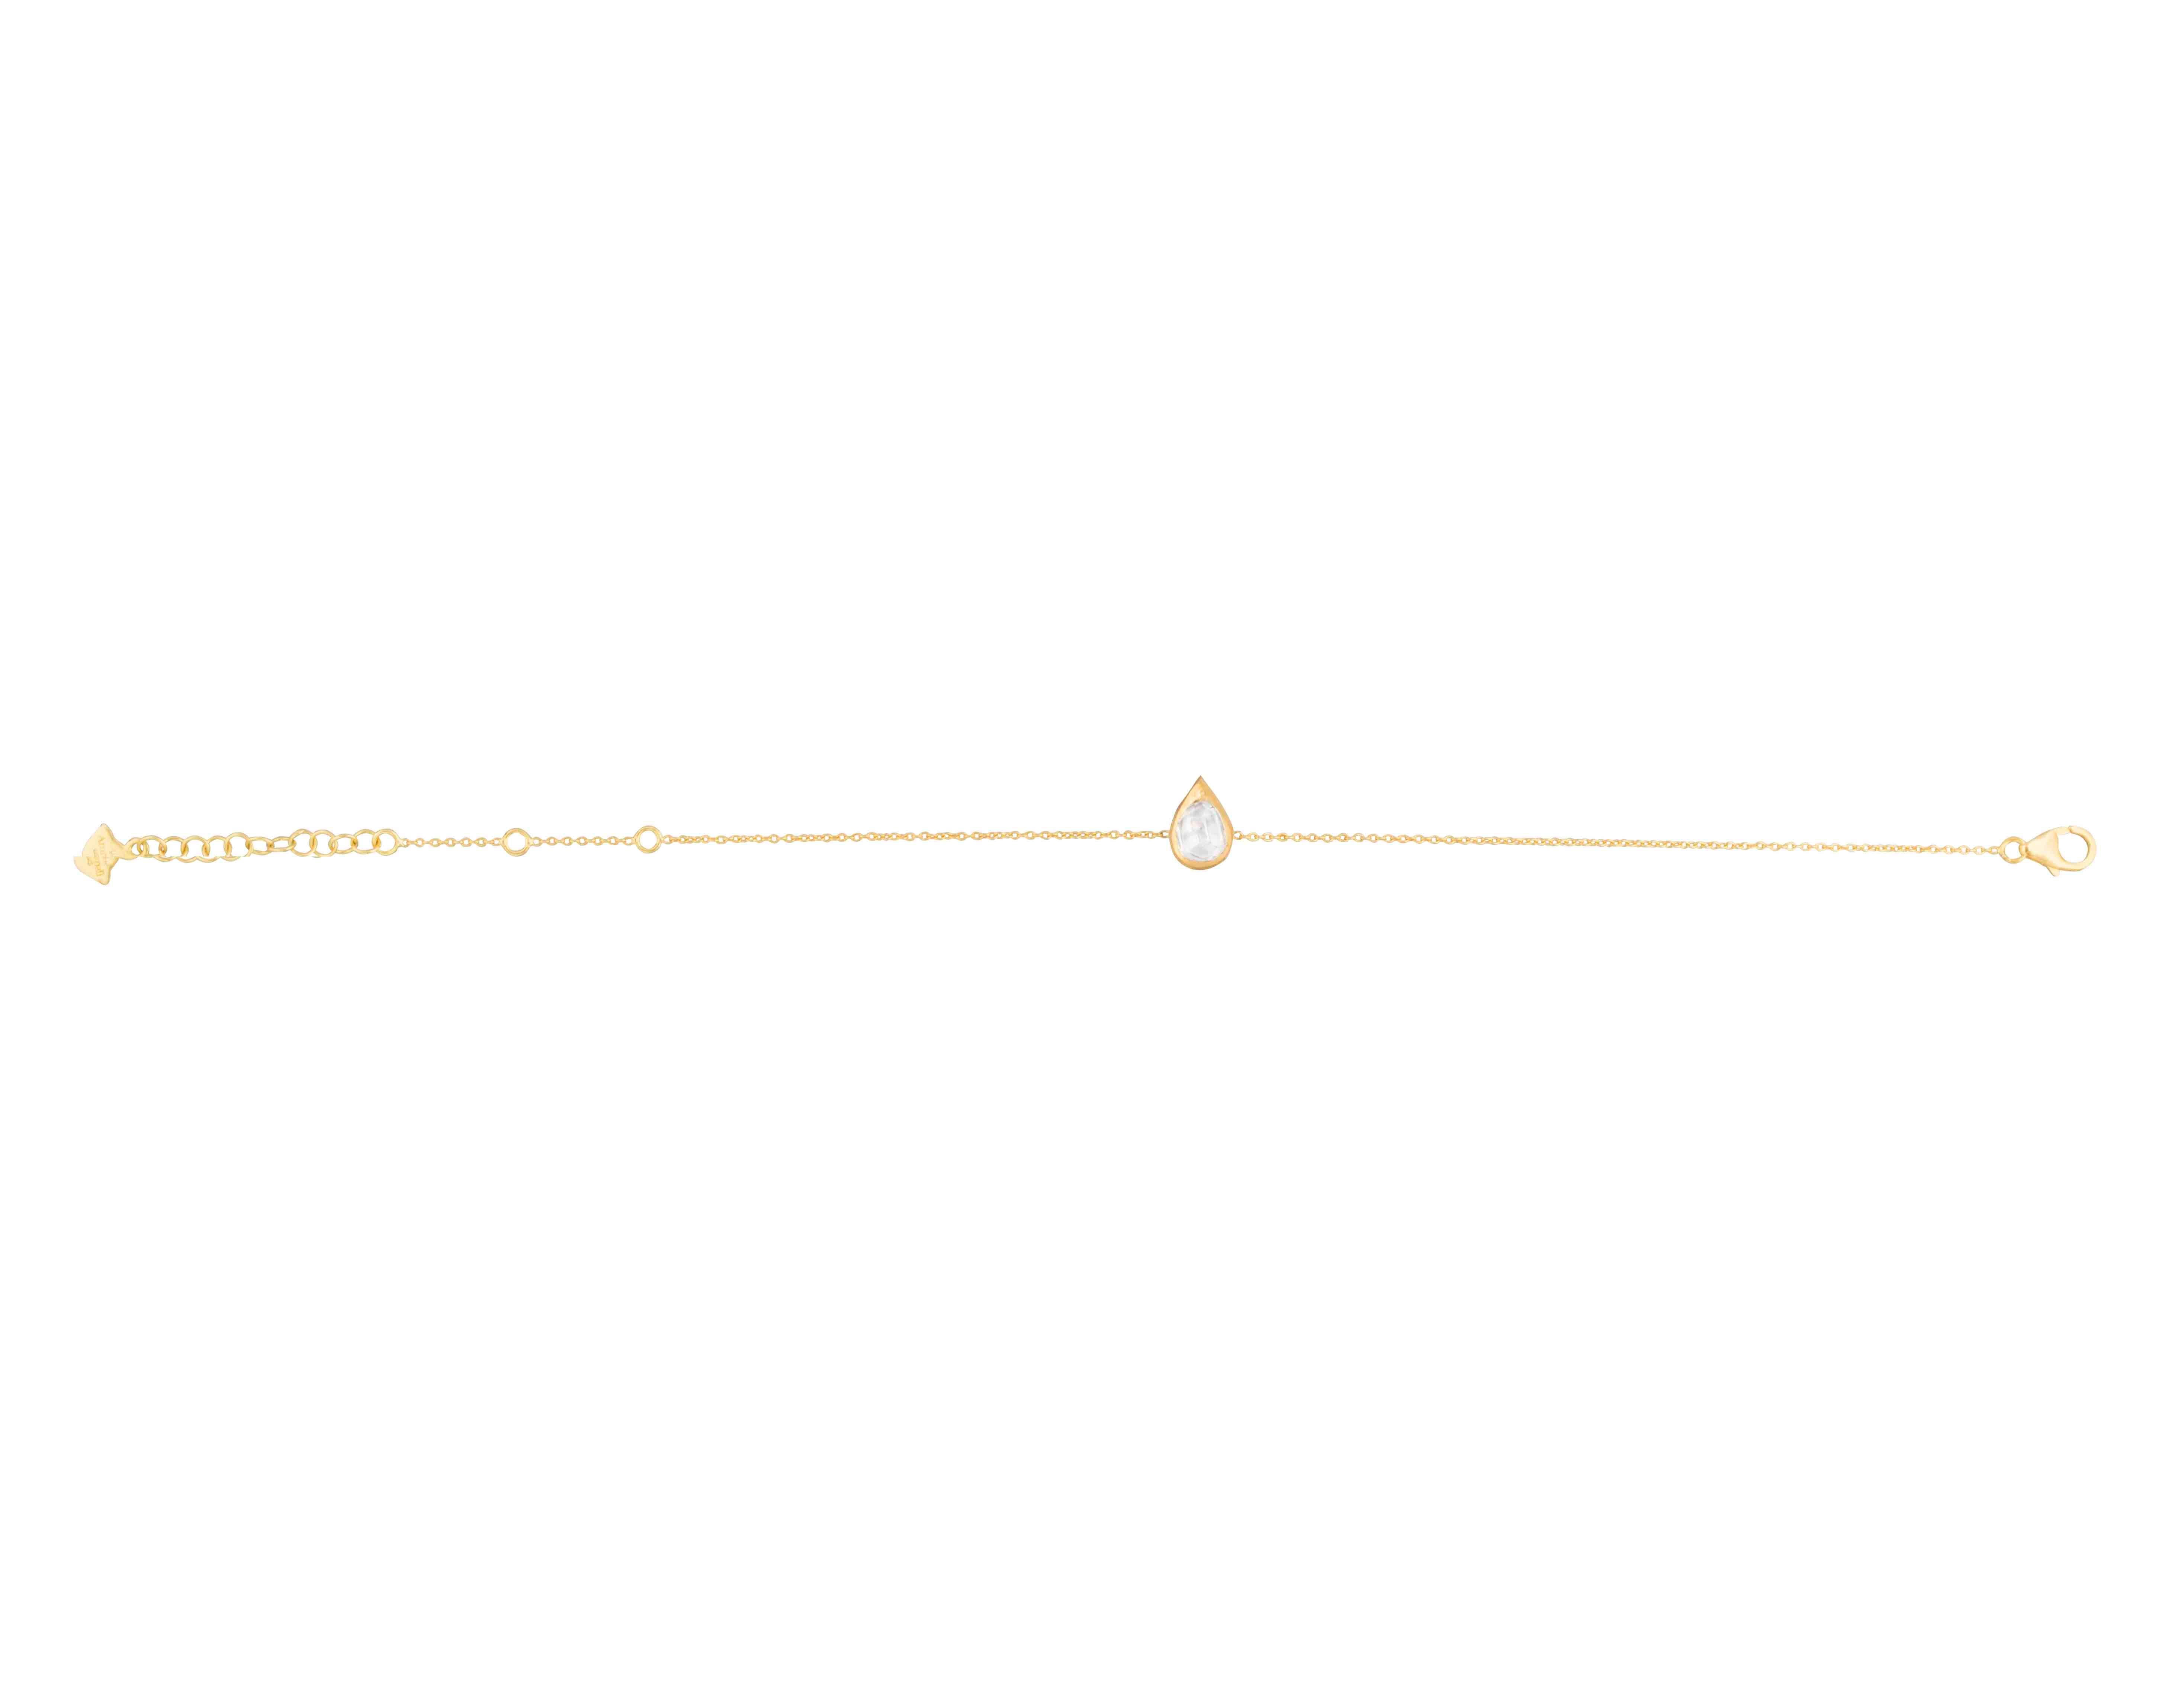 Amrapali Jewels 18k gold and Diamond bracelet  

Diamond weight - 0.034ct

Length - 6-8in